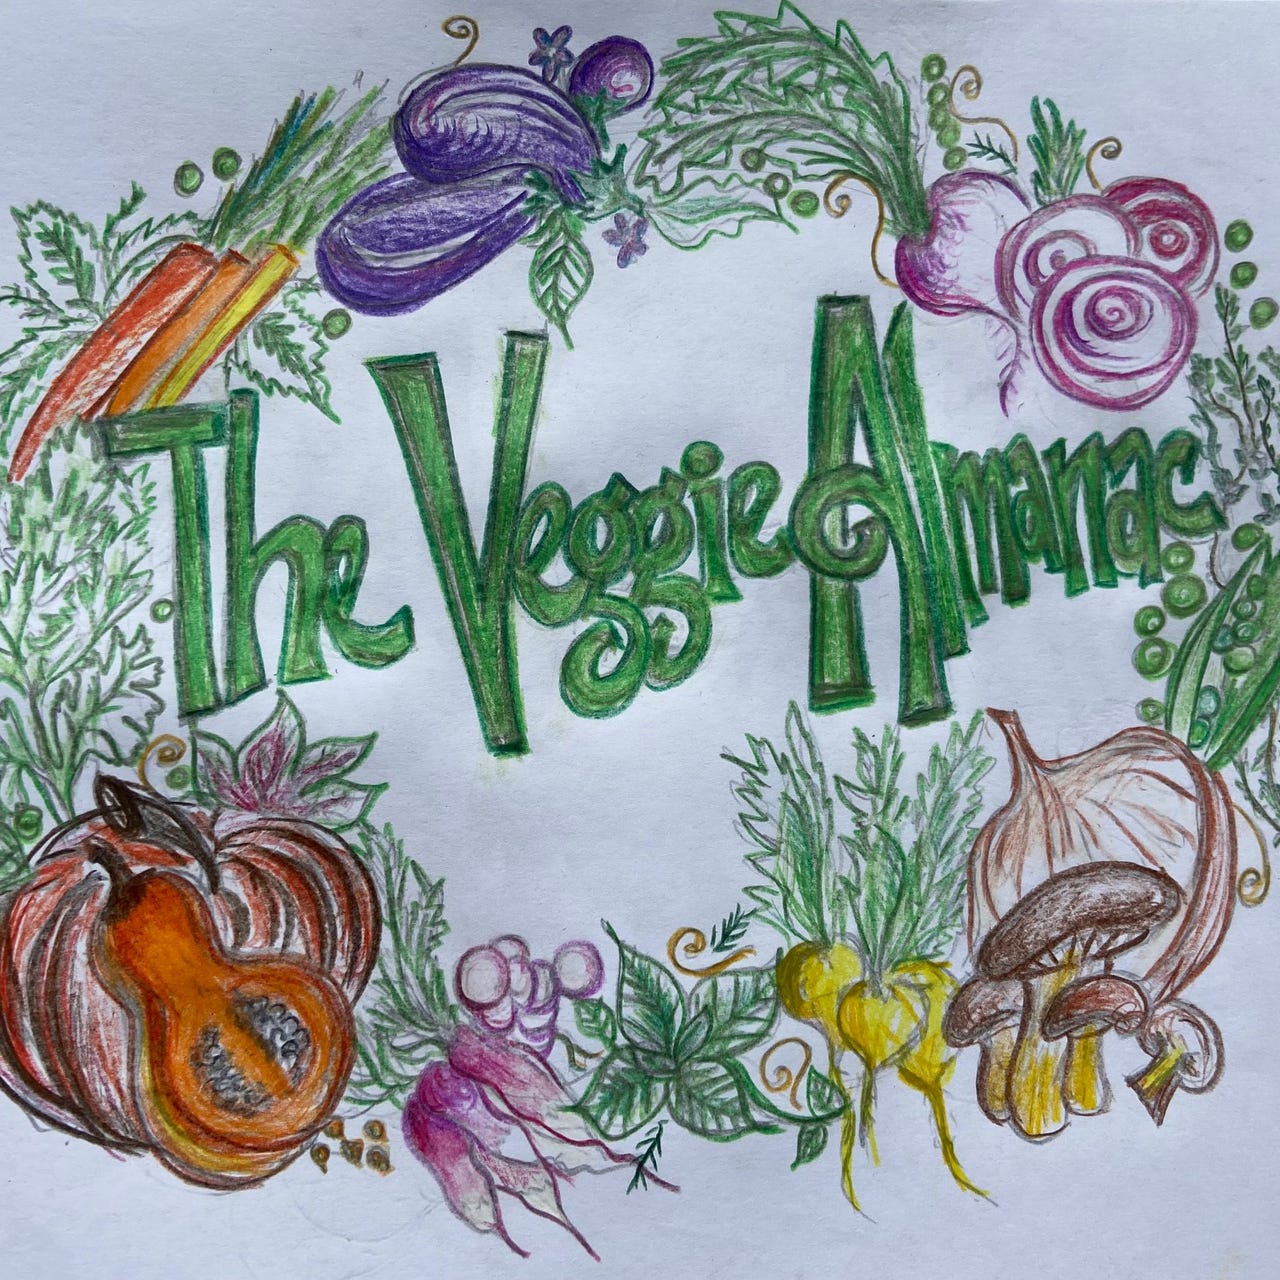 Artwork for The Veggie Almanac